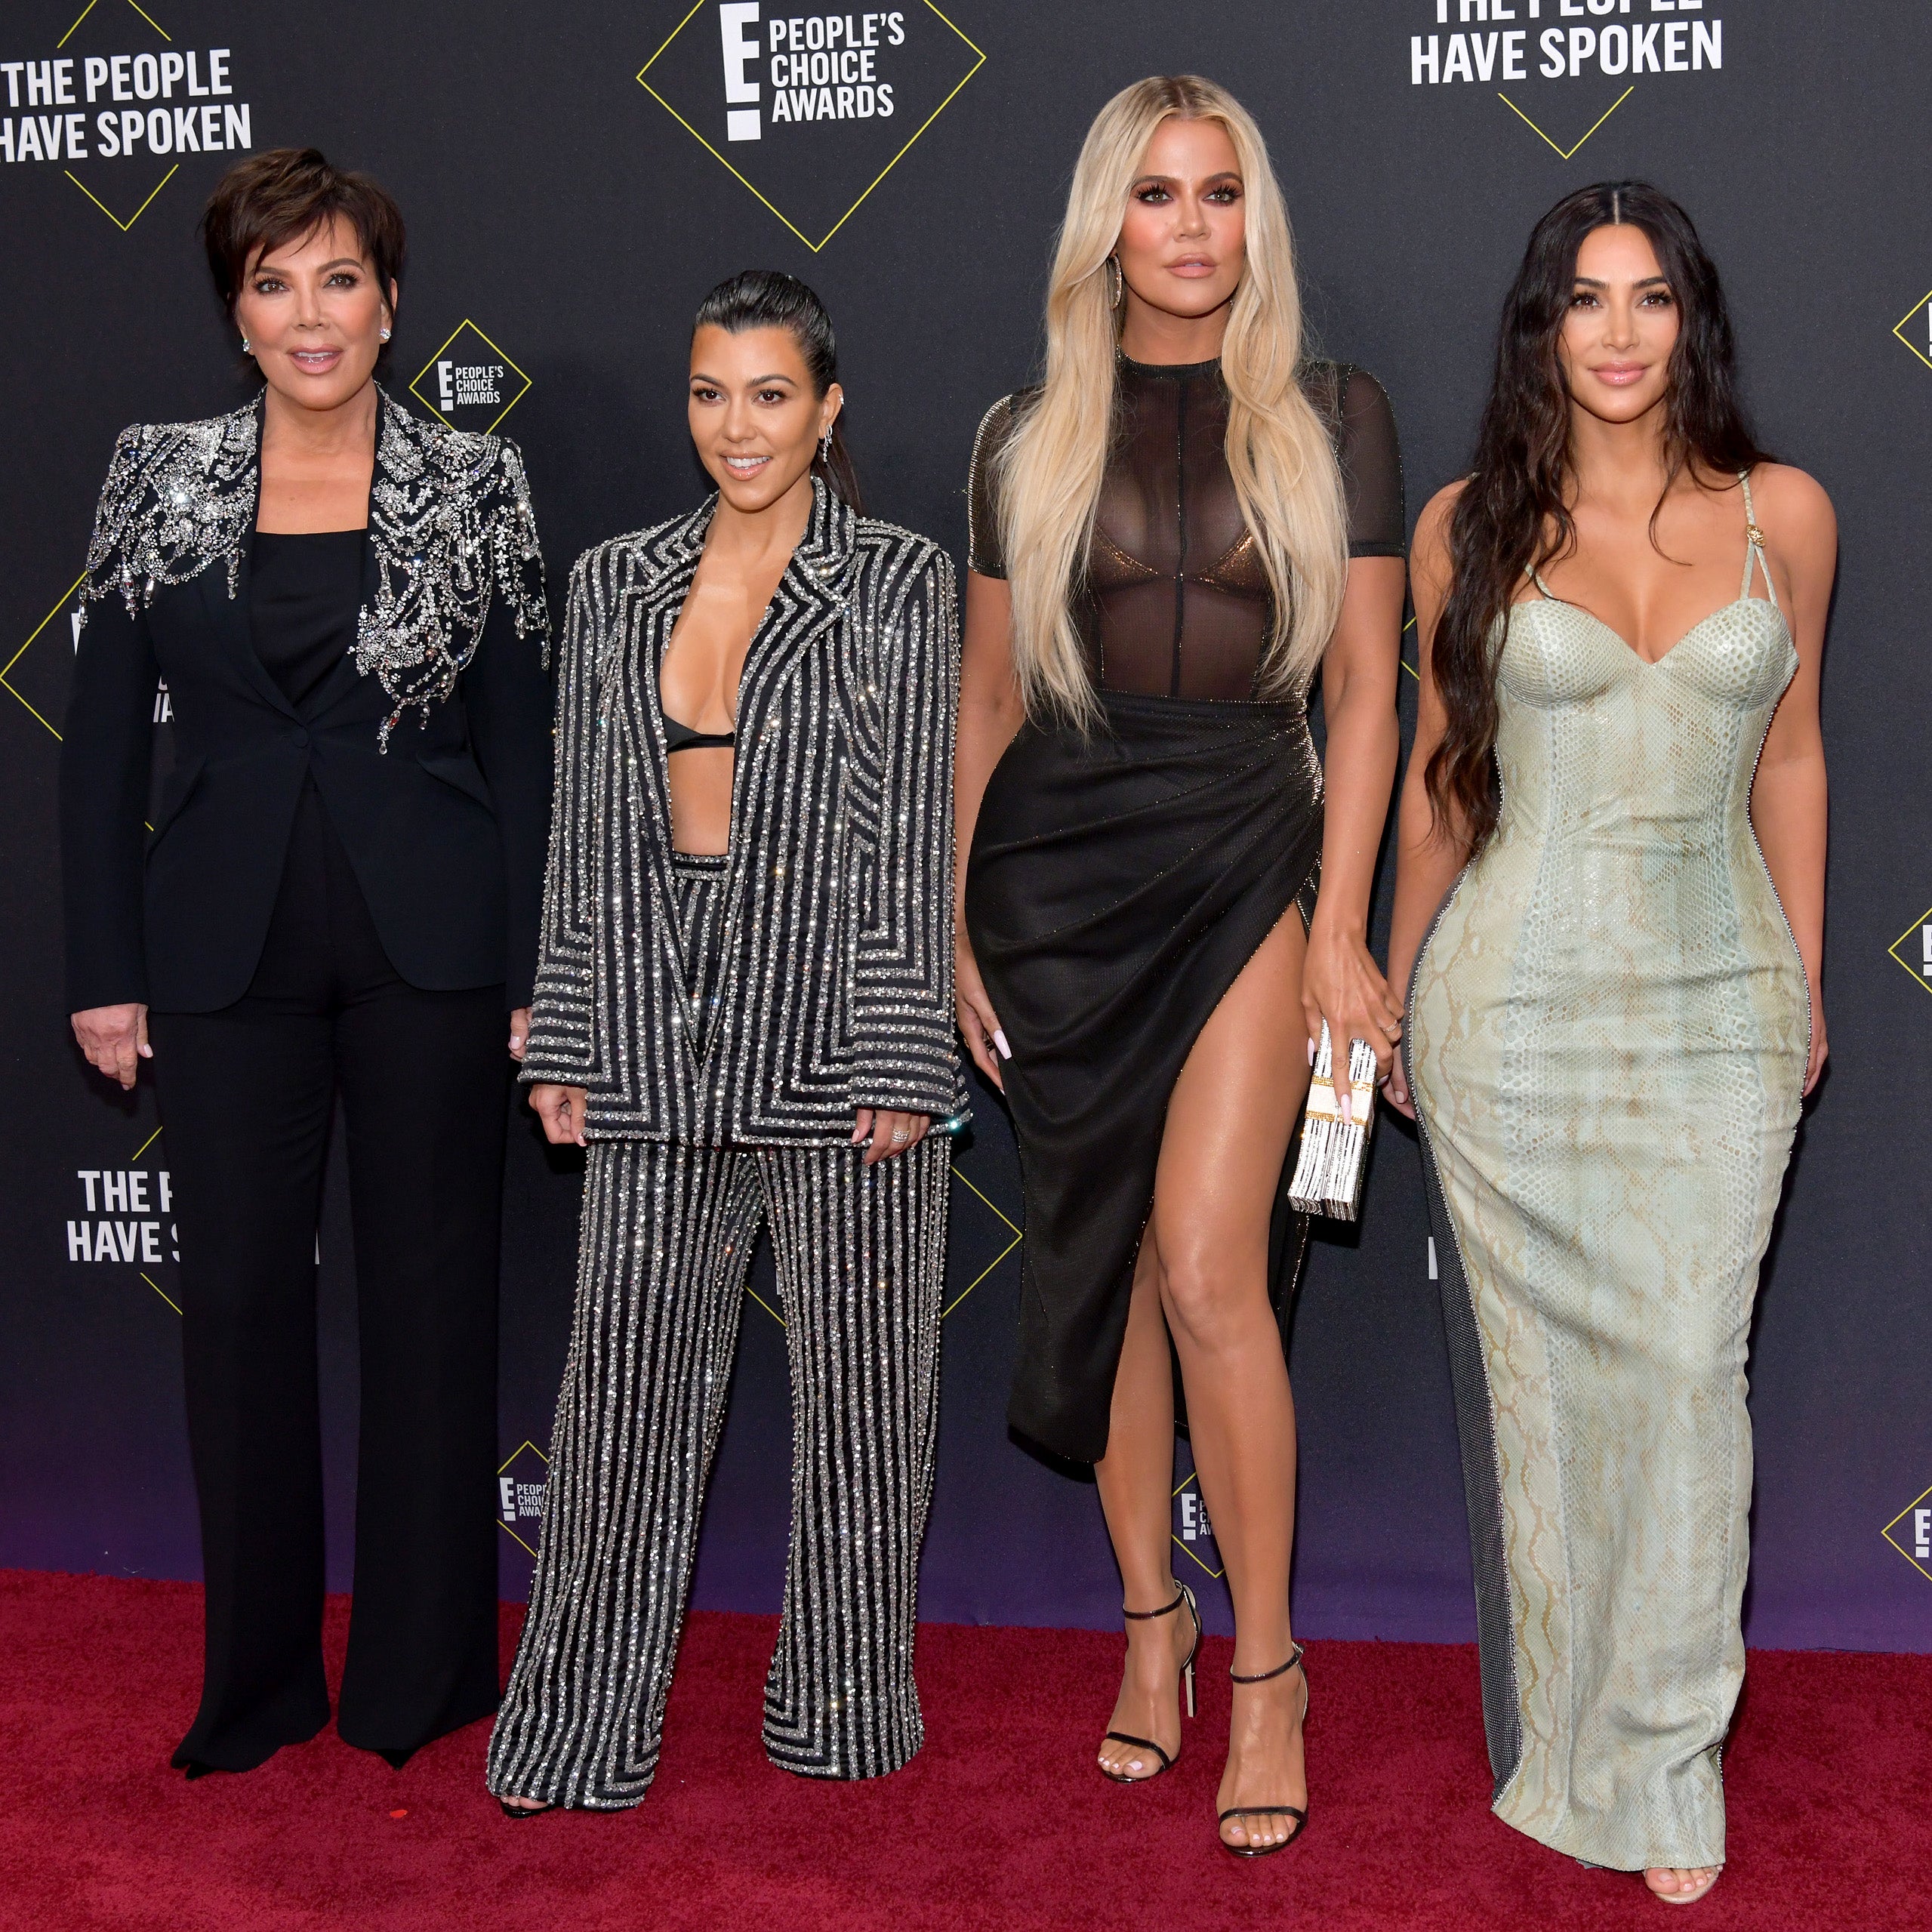 Kris Jenner, Kourtney Kardashian, Khloé Kardashian and Kim Kardashian at the E! People's Choice Awards on 10 November 2019 in Santa Monica, California.